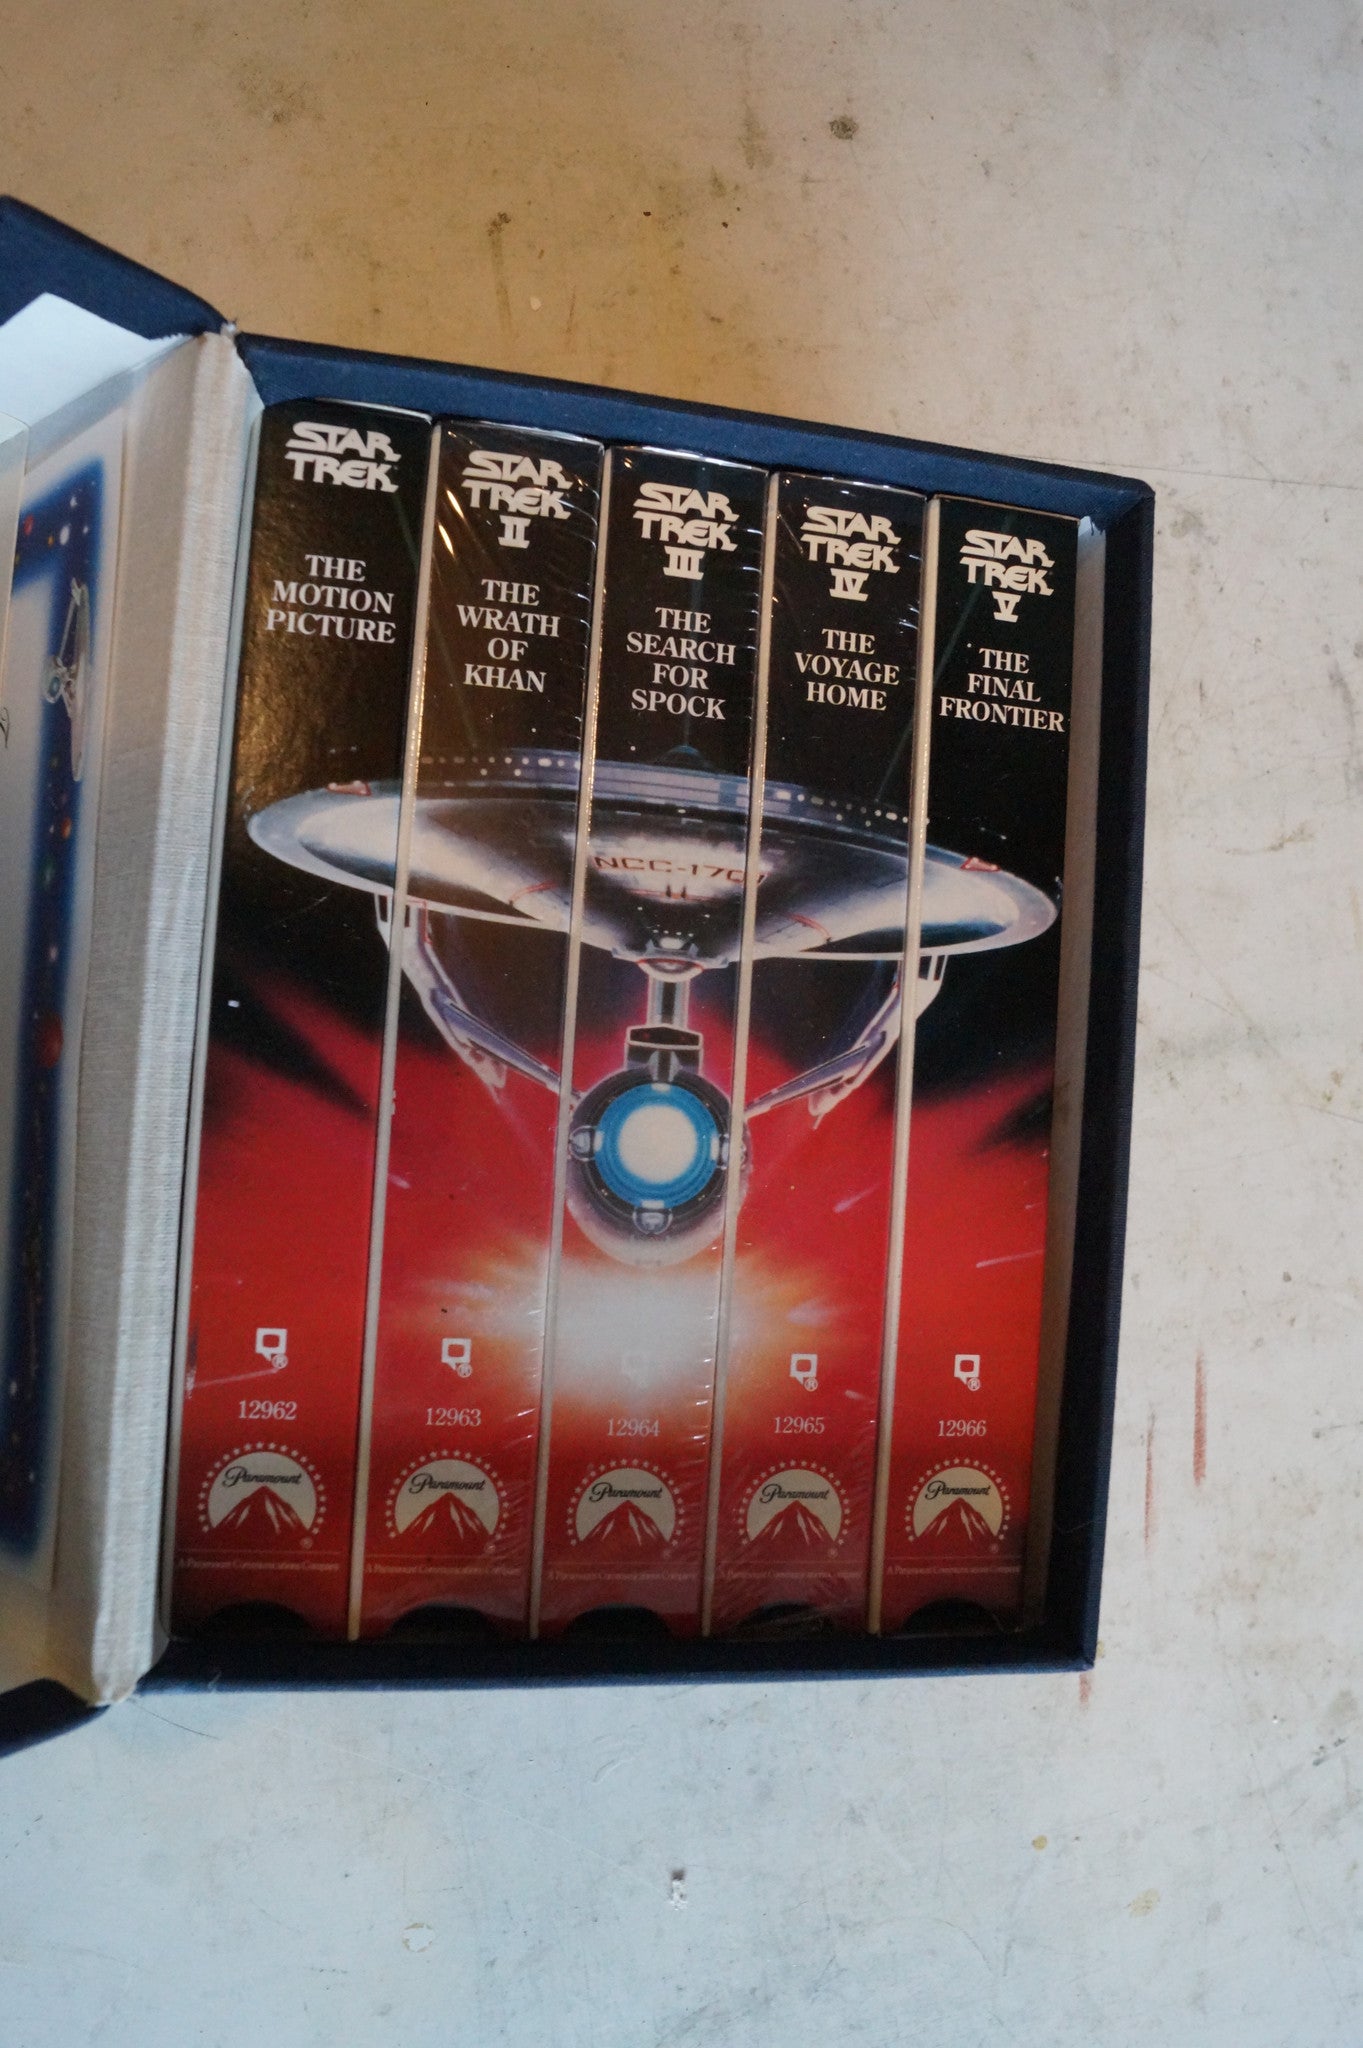 Star Trek 25th Anniversary VHS Collection